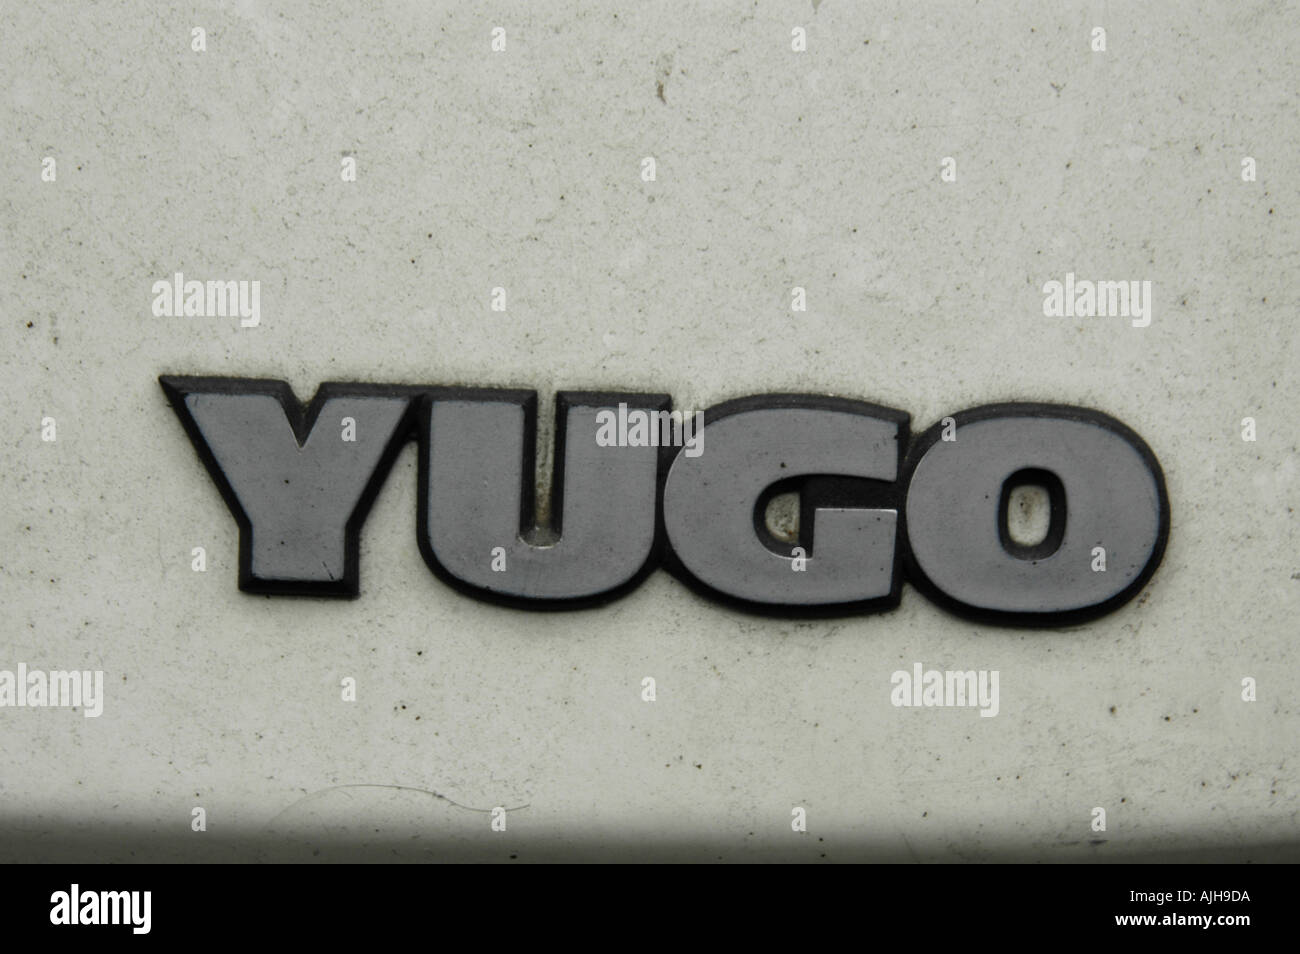 car brand Yugo Stock Photo